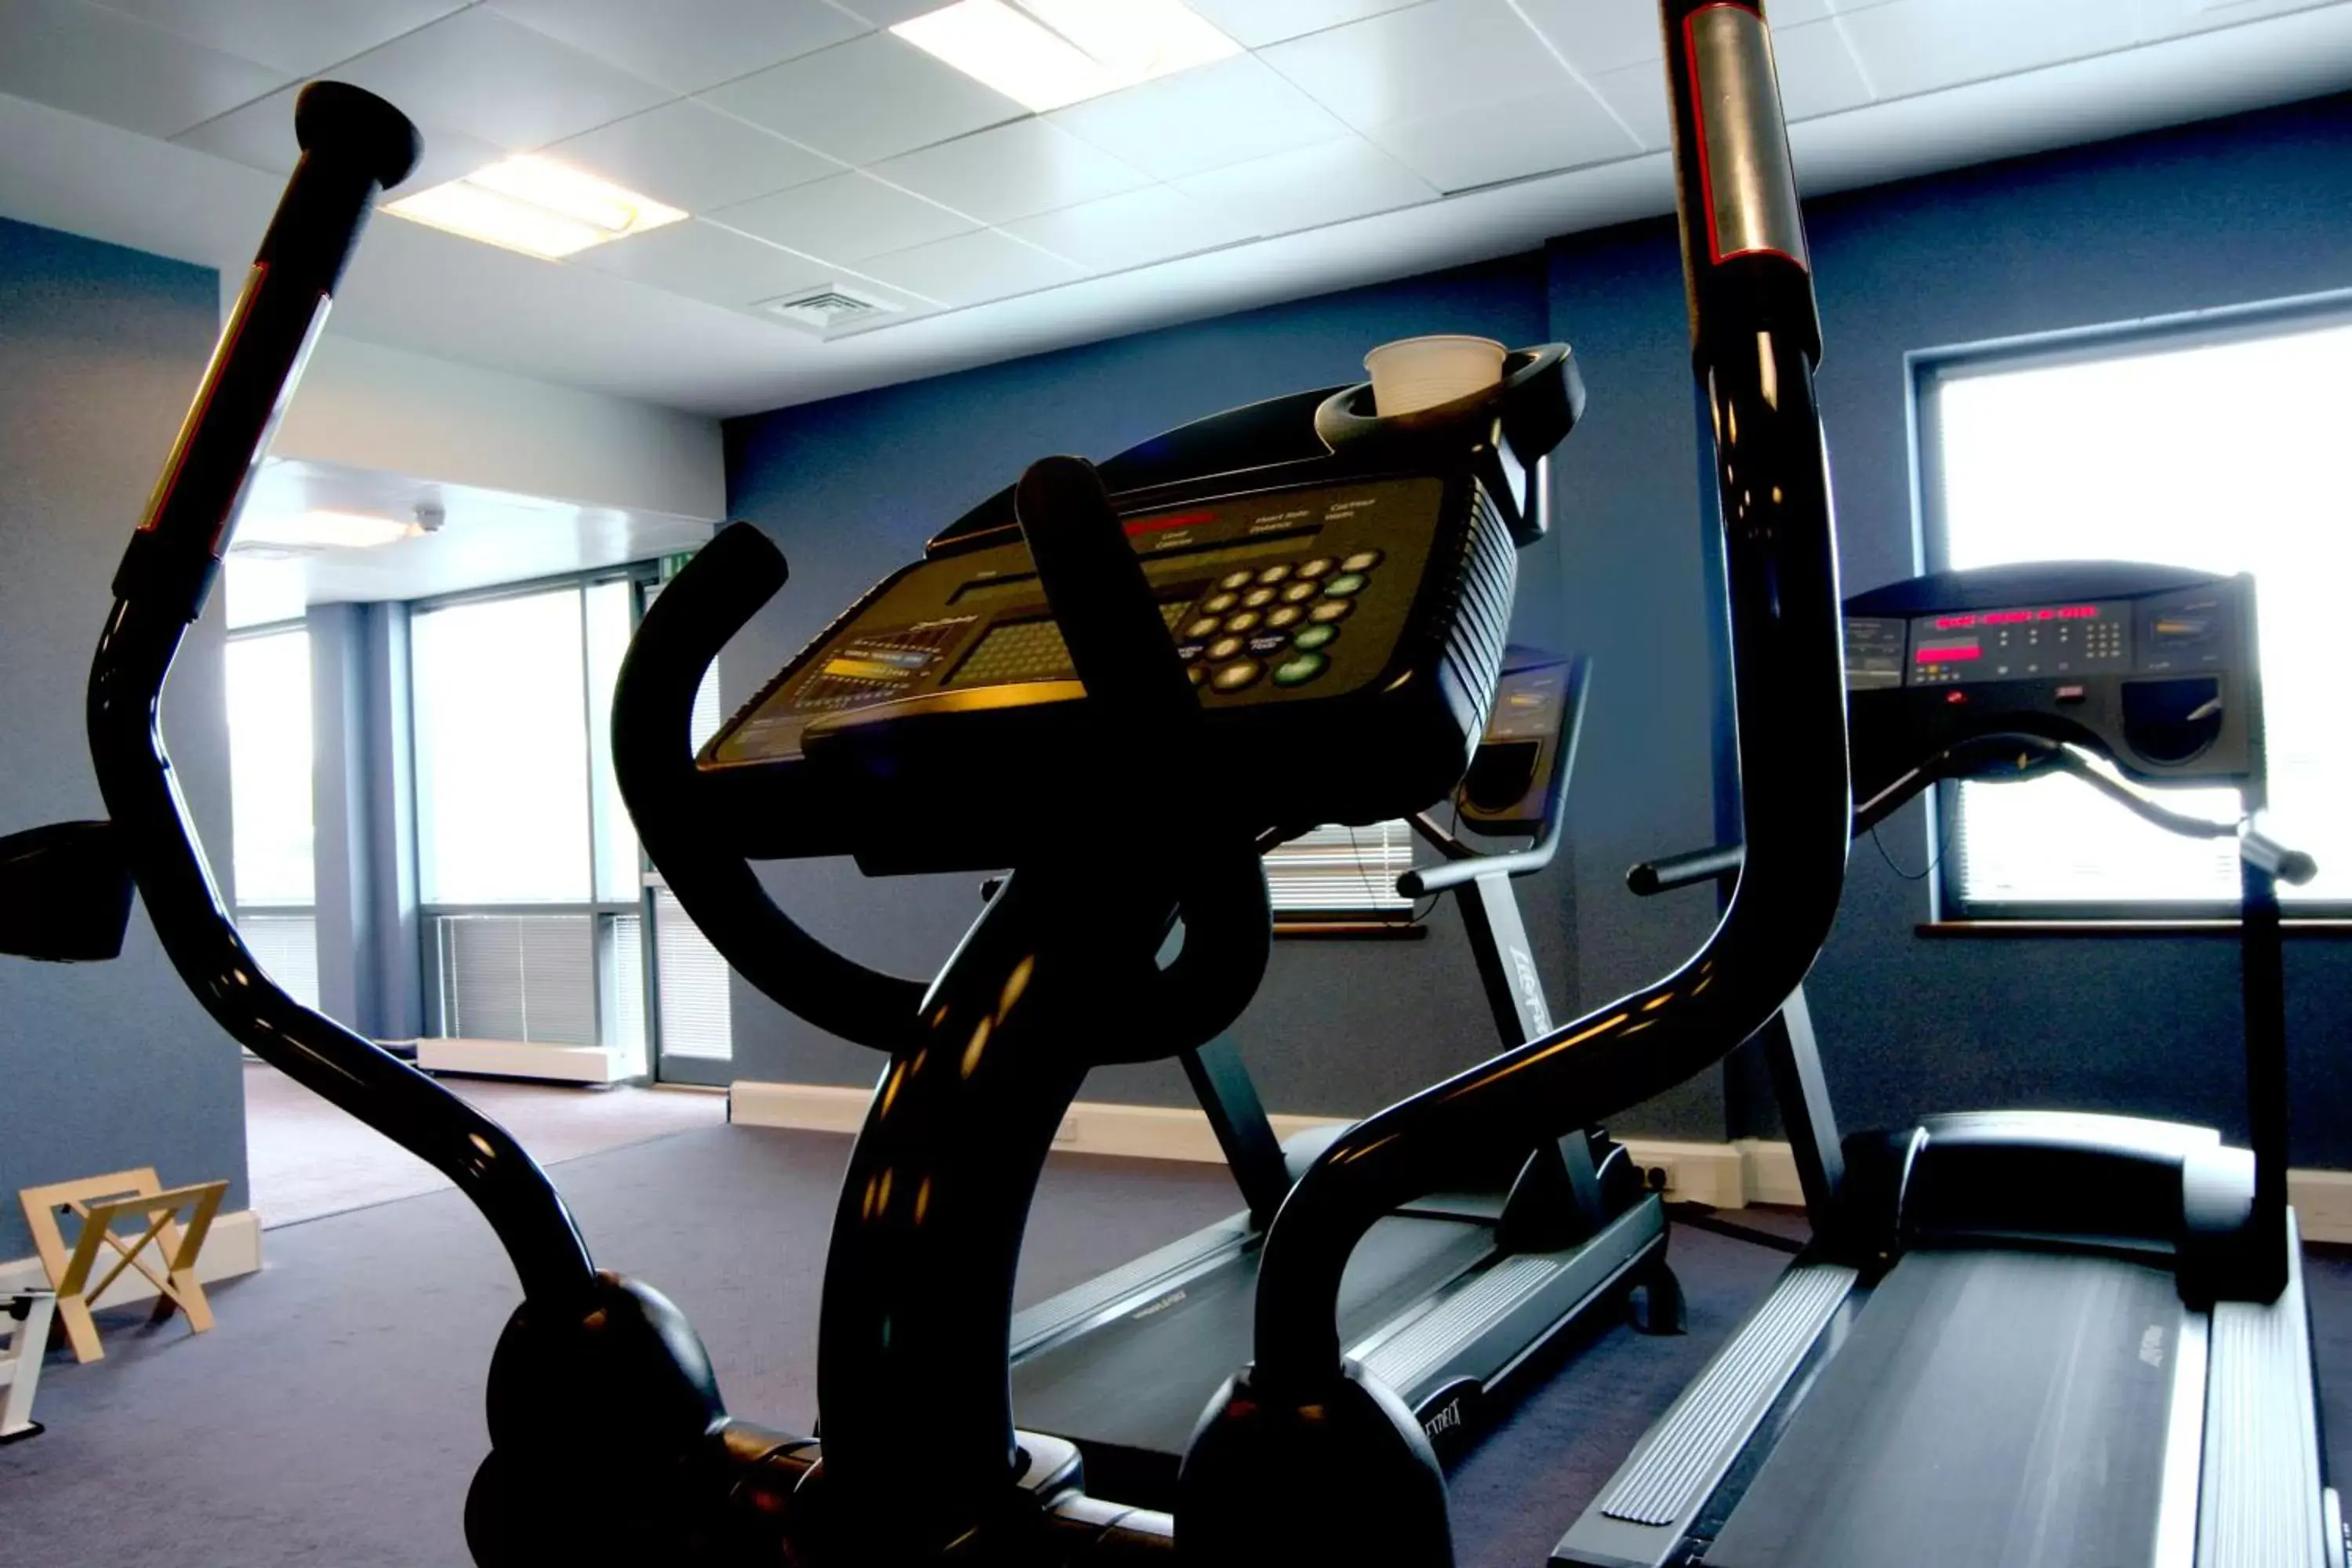 Fitness centre/facilities, Fitness Center/Facilities in Crowne Plaza Birmingham NEC, an IHG Hotel